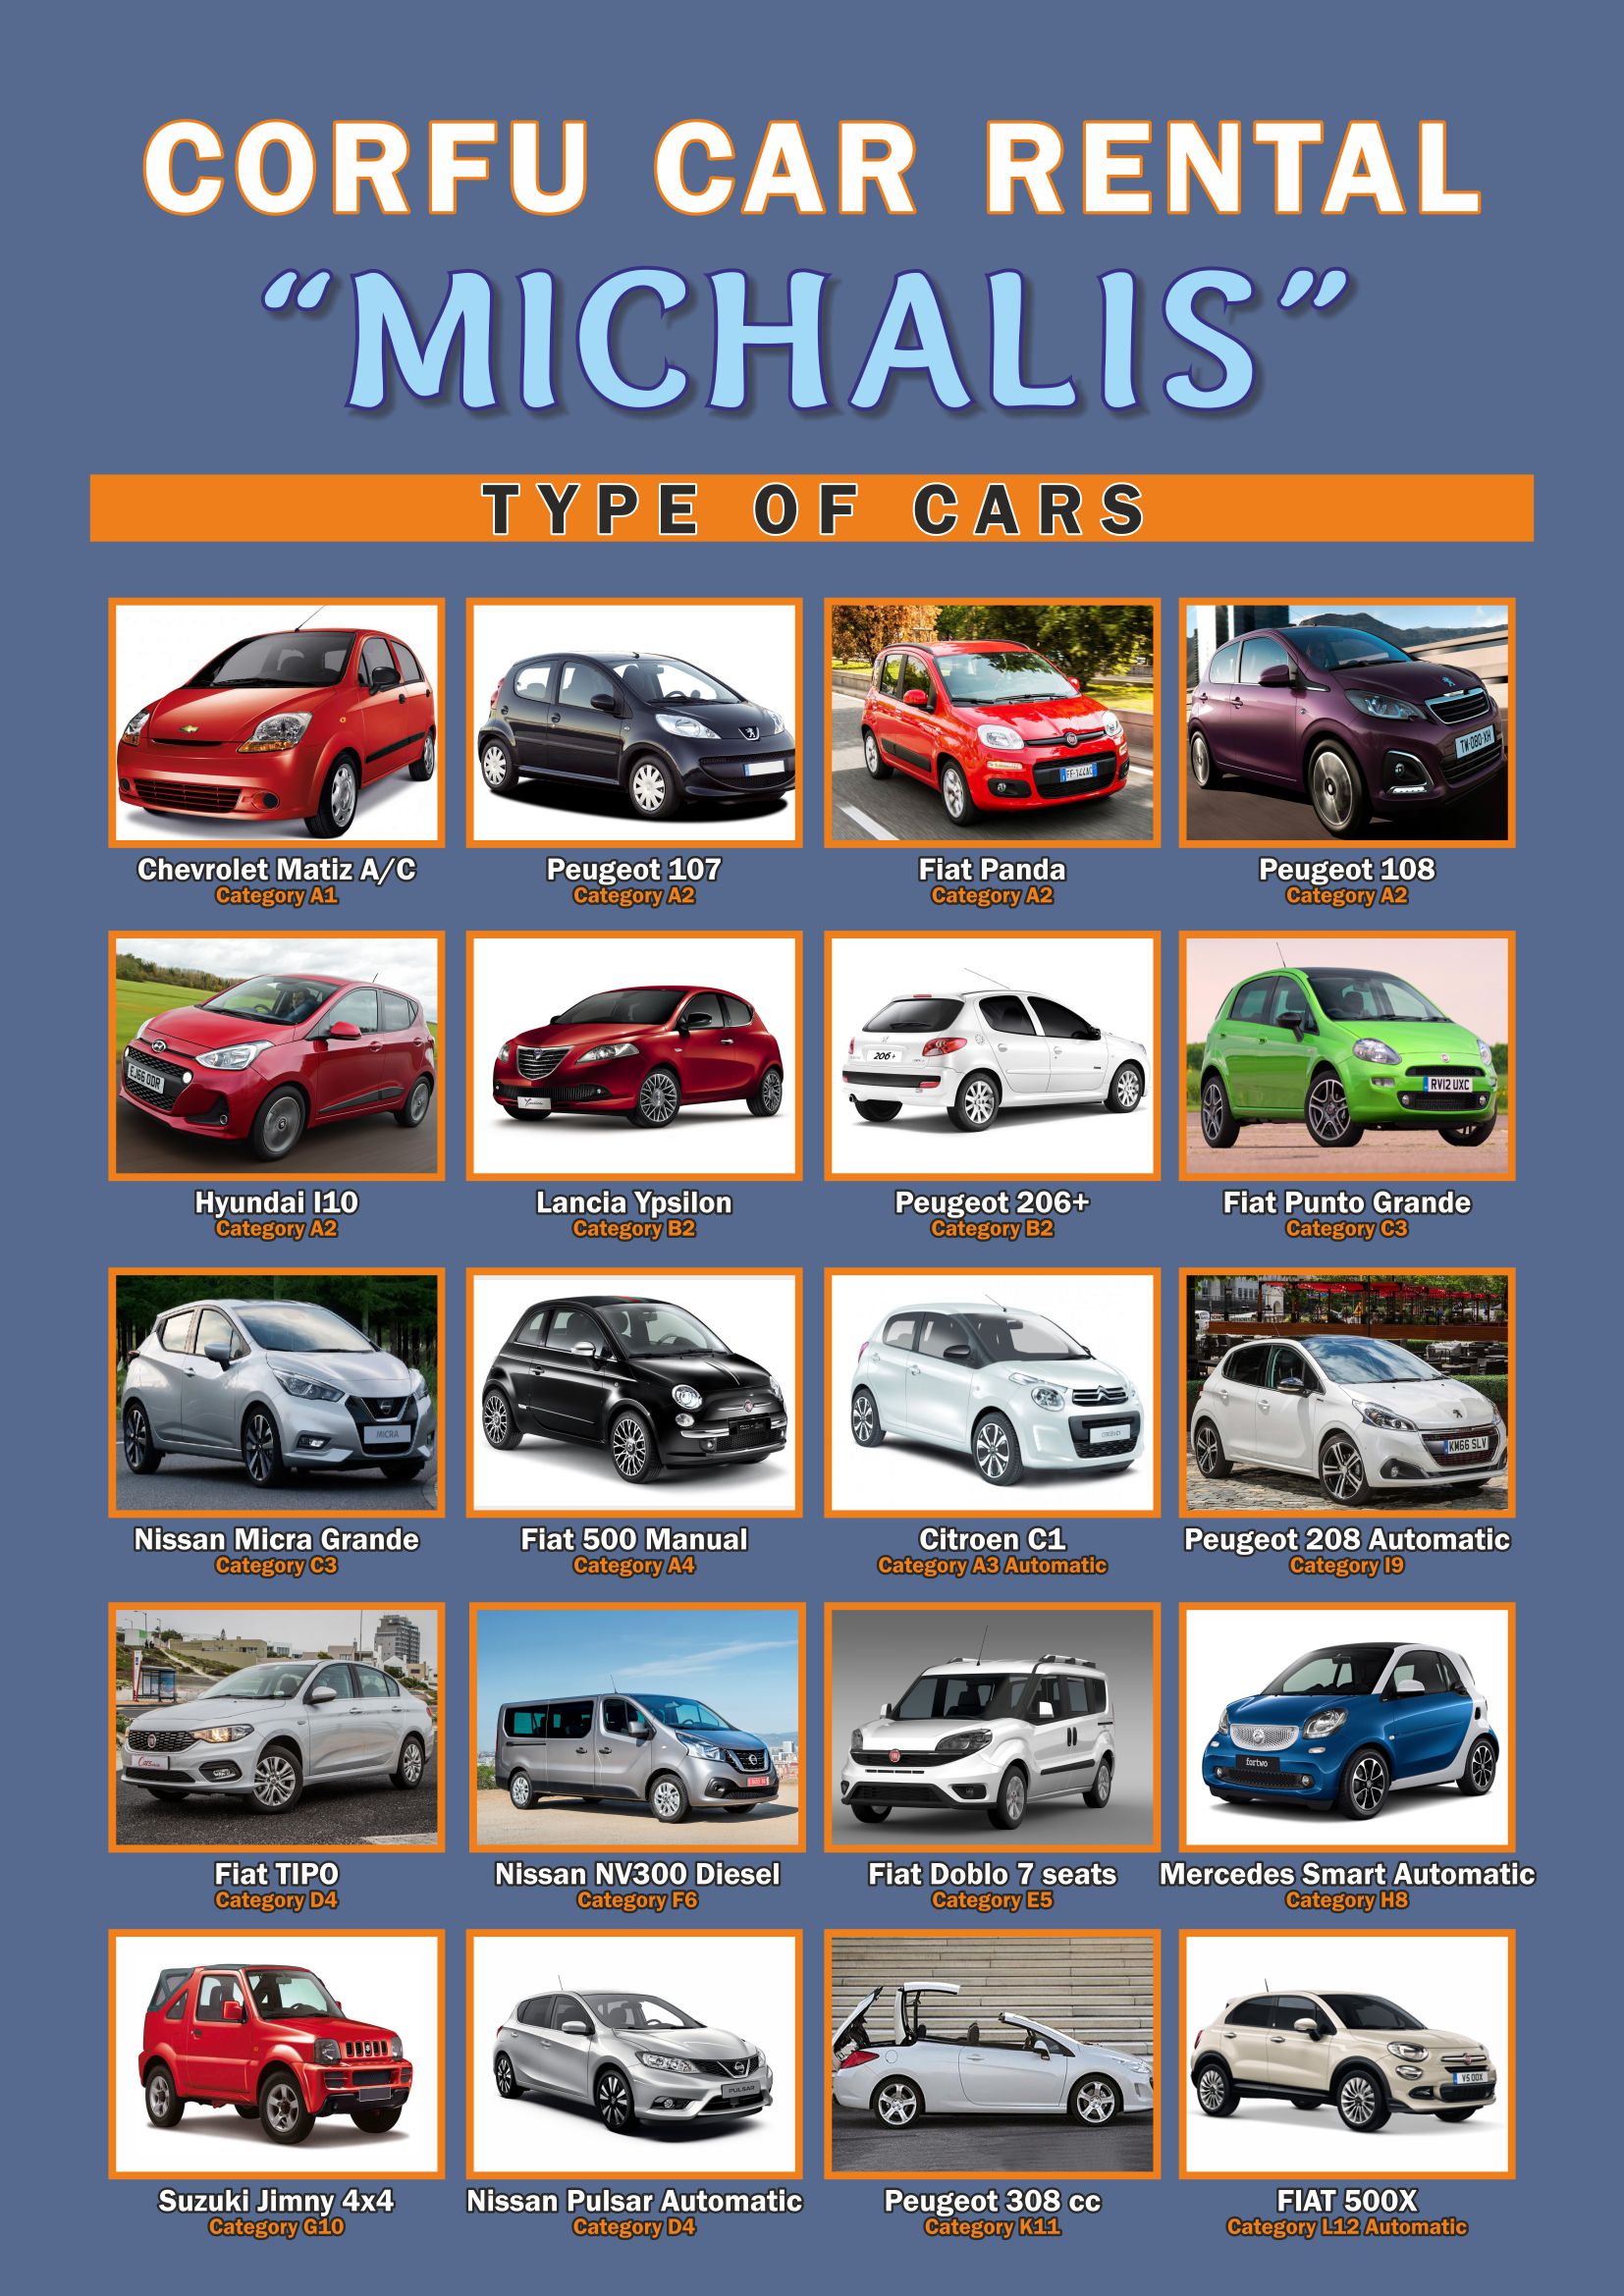 MICHALIS CARS 2018.jpg